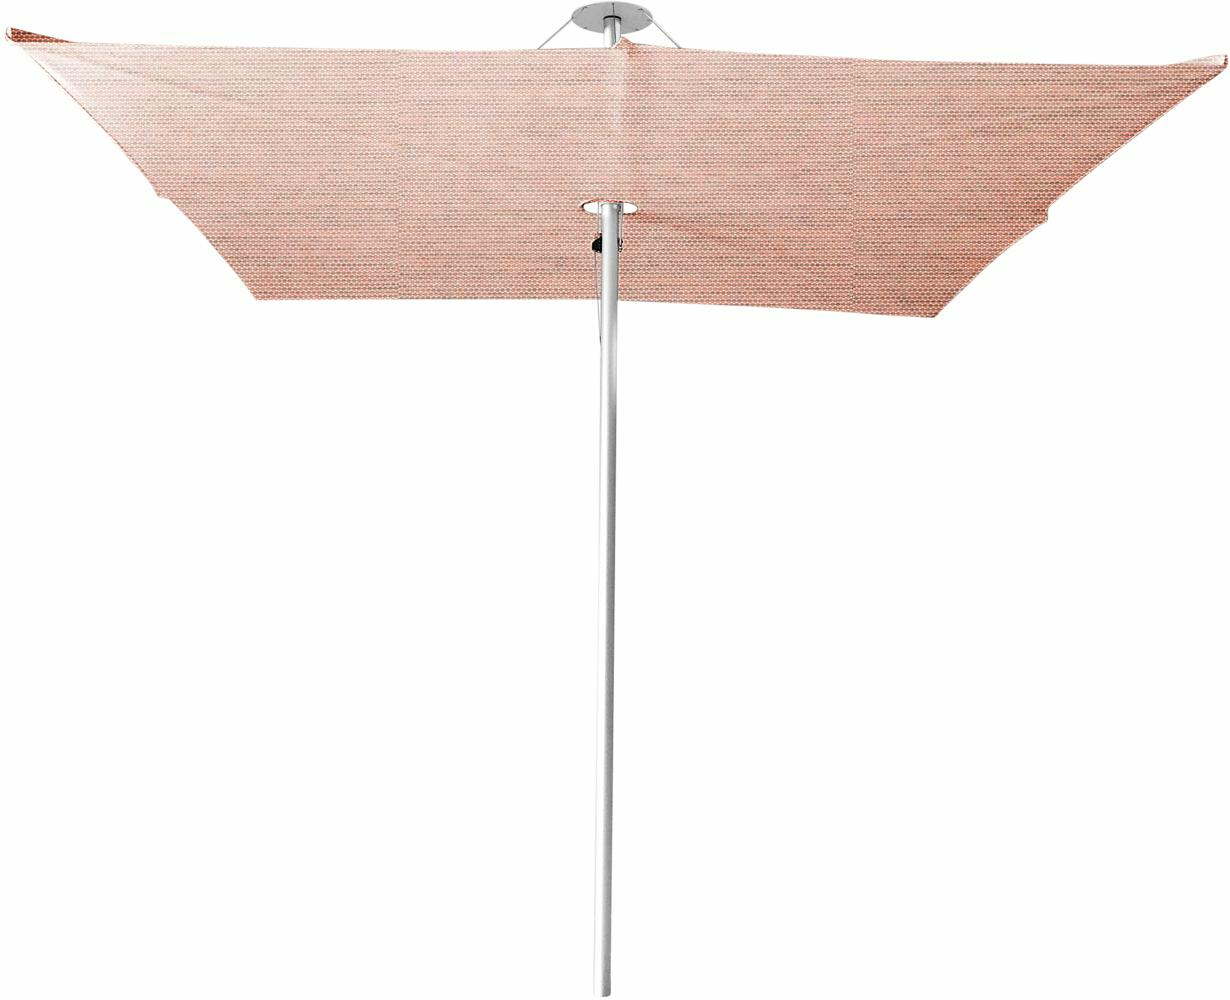 Infina canopy square 3 m in colour Blush